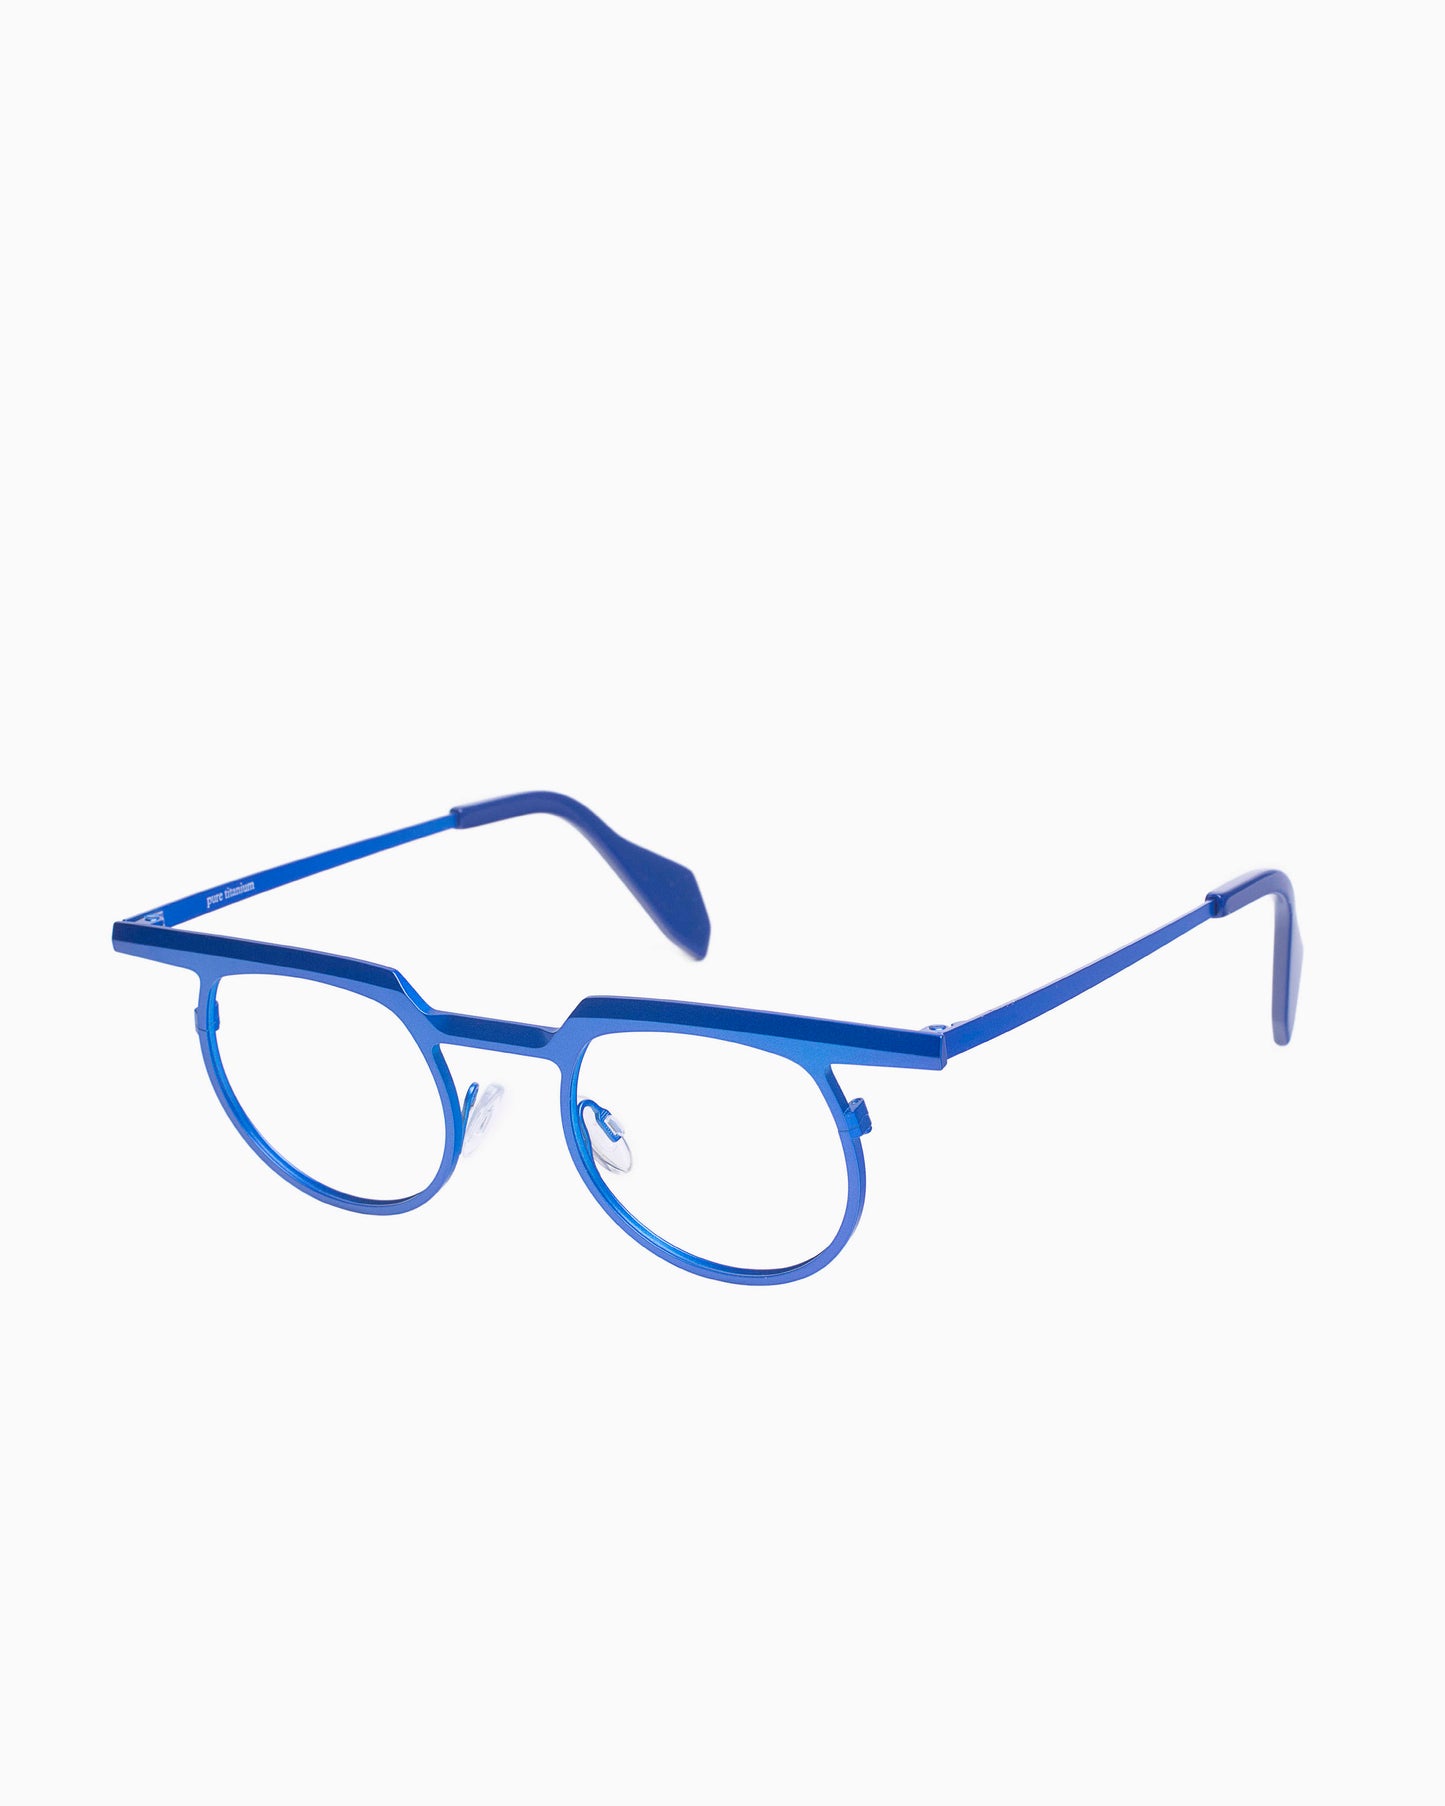 Theo - Zinnia - 601 | glasses bar